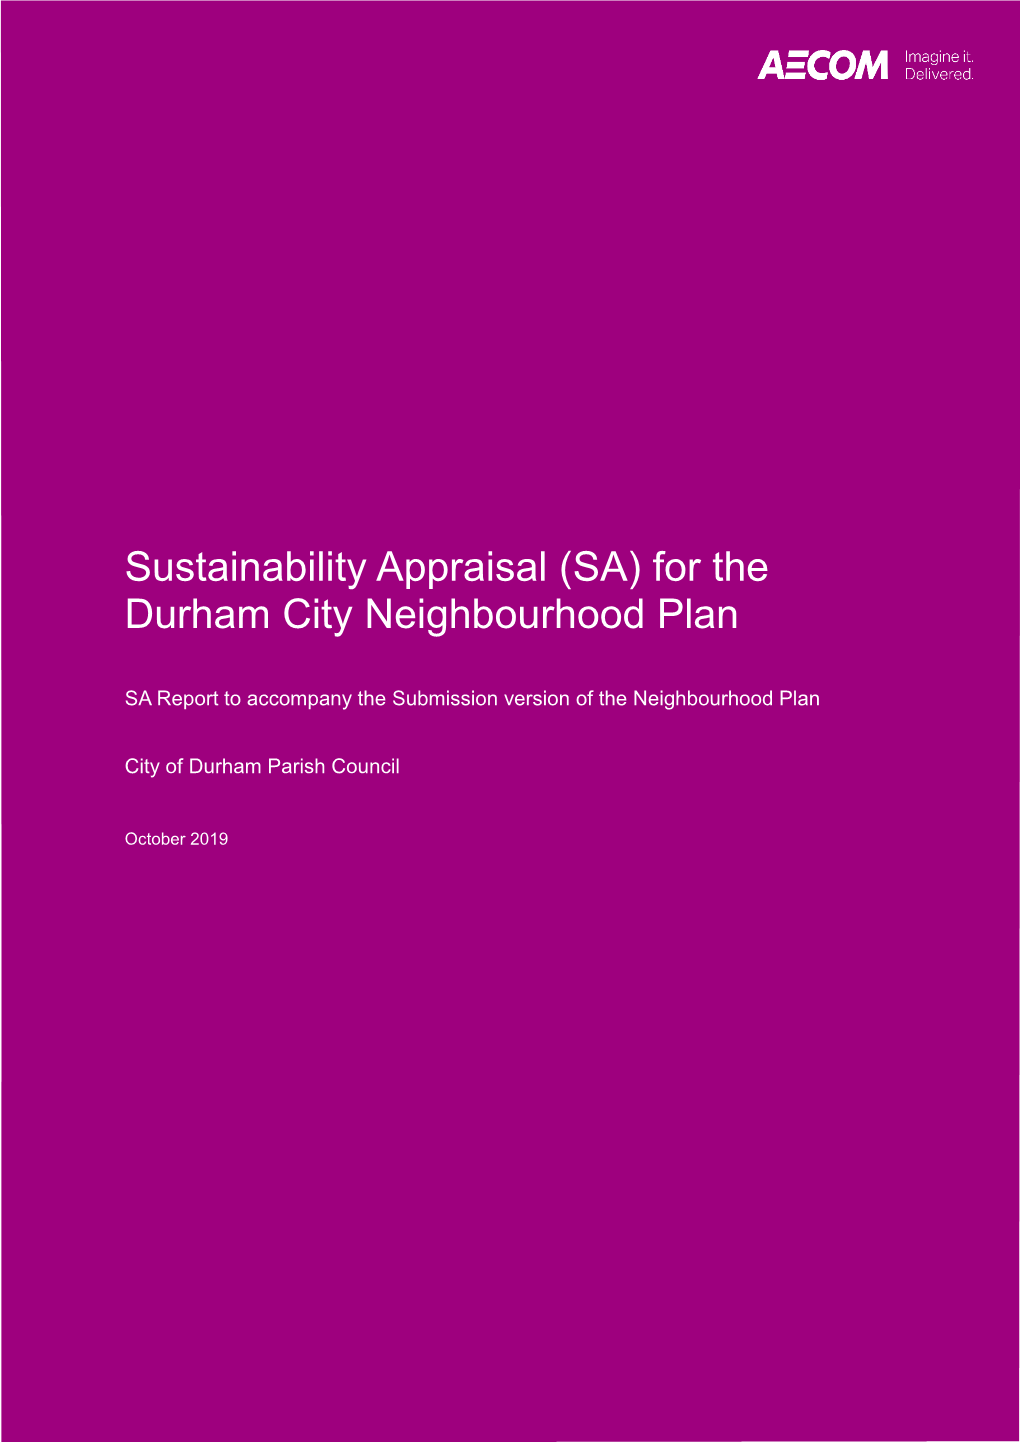 Report Sustainability Appraisal (SA) for the Durham City Neighbourhood